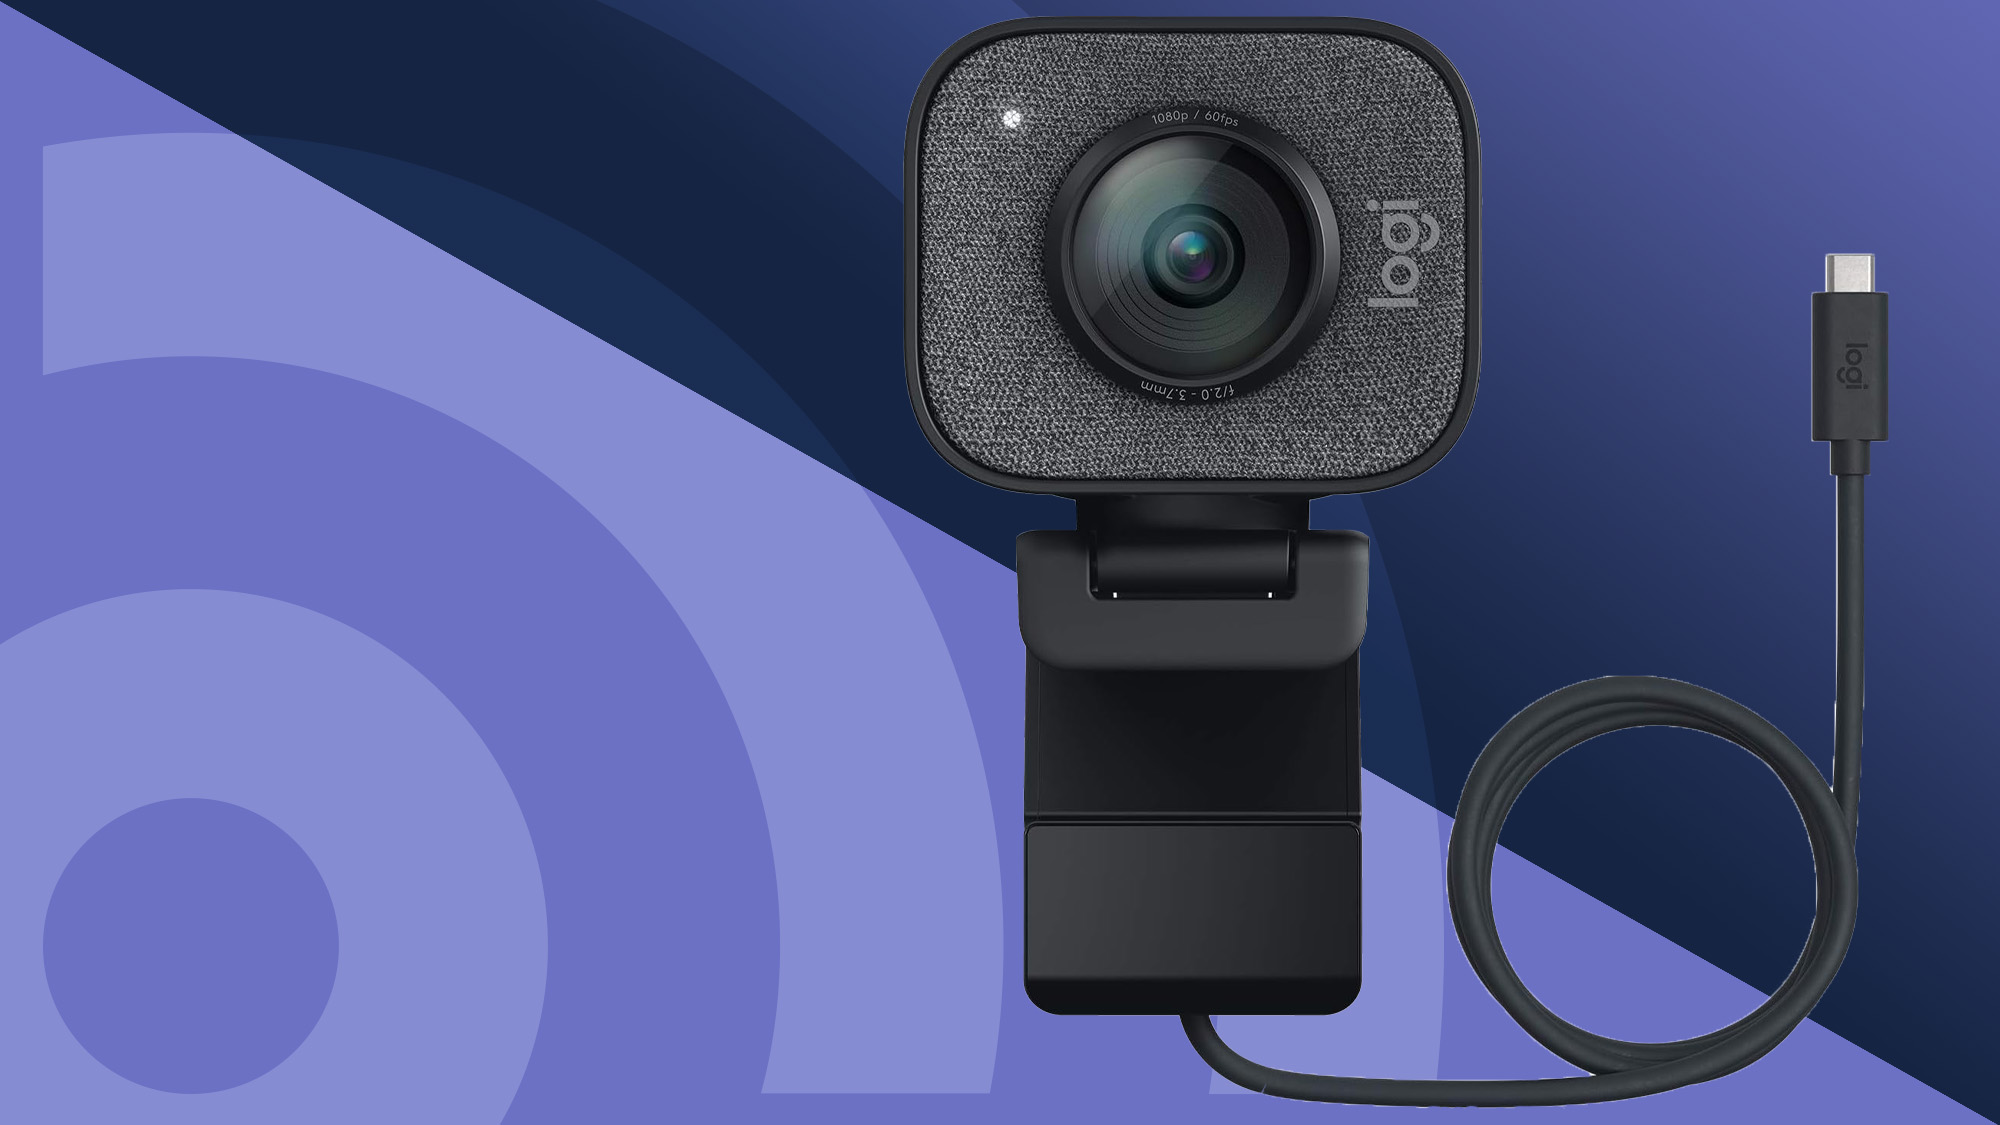 Camara Web Webcam Logitech C922 Pro 1080p Hd 60fps Pc Stream